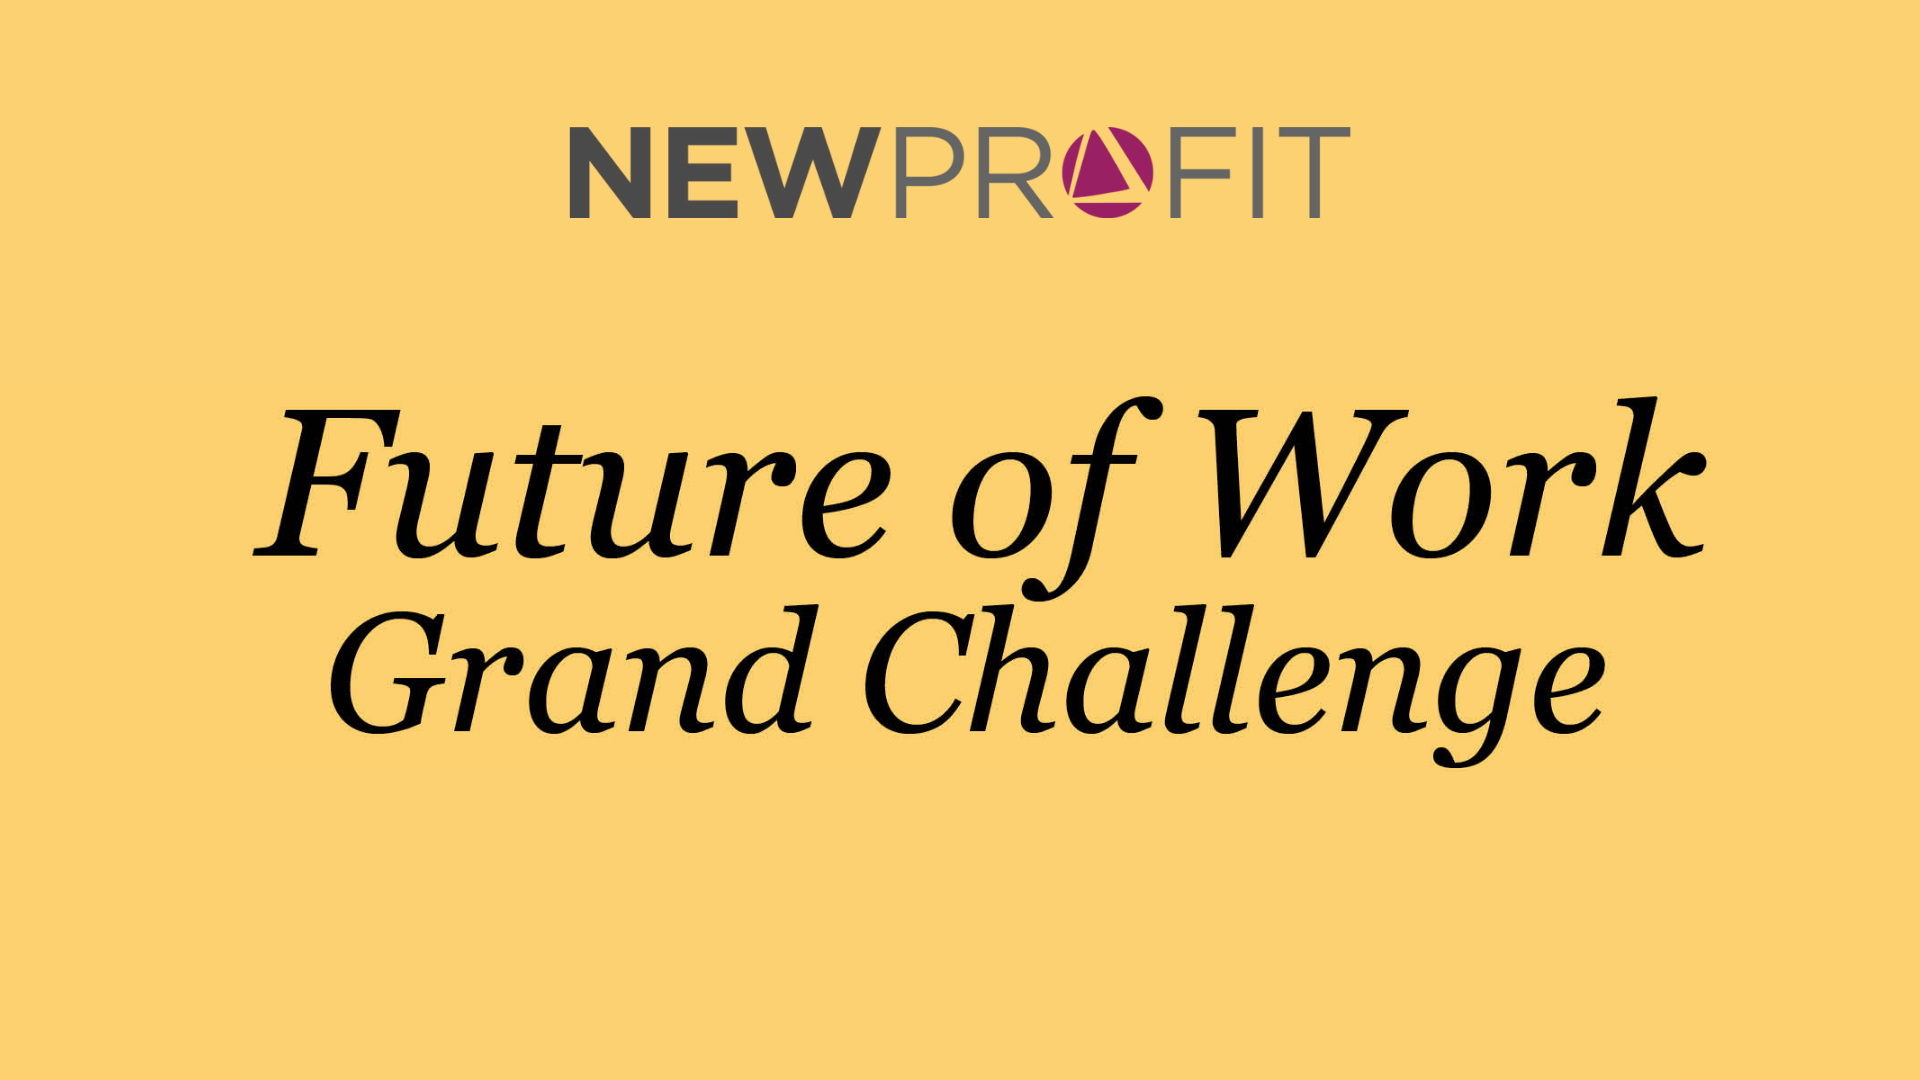 The Future of Work Grand Challenge WorkingNation